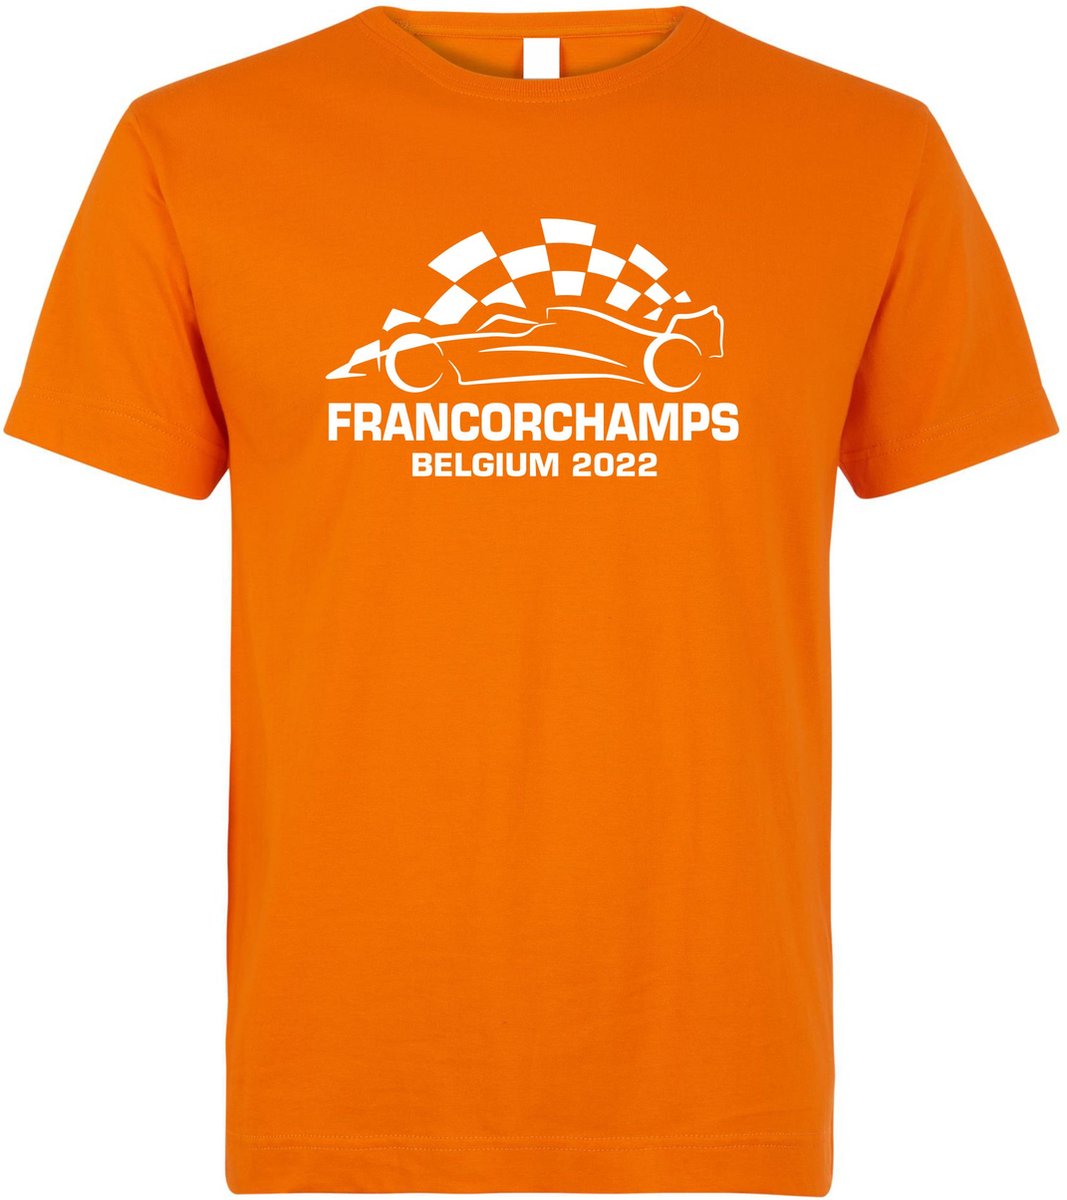 T-shirt kinderen Francorchamps Belgium 2022 met raceauto | Max Verstappen / Red Bull Racing / Formule 1 fan | Grand Prix Circuit Spa-Francorchamps | kleding shirt | Oranje | maat 92